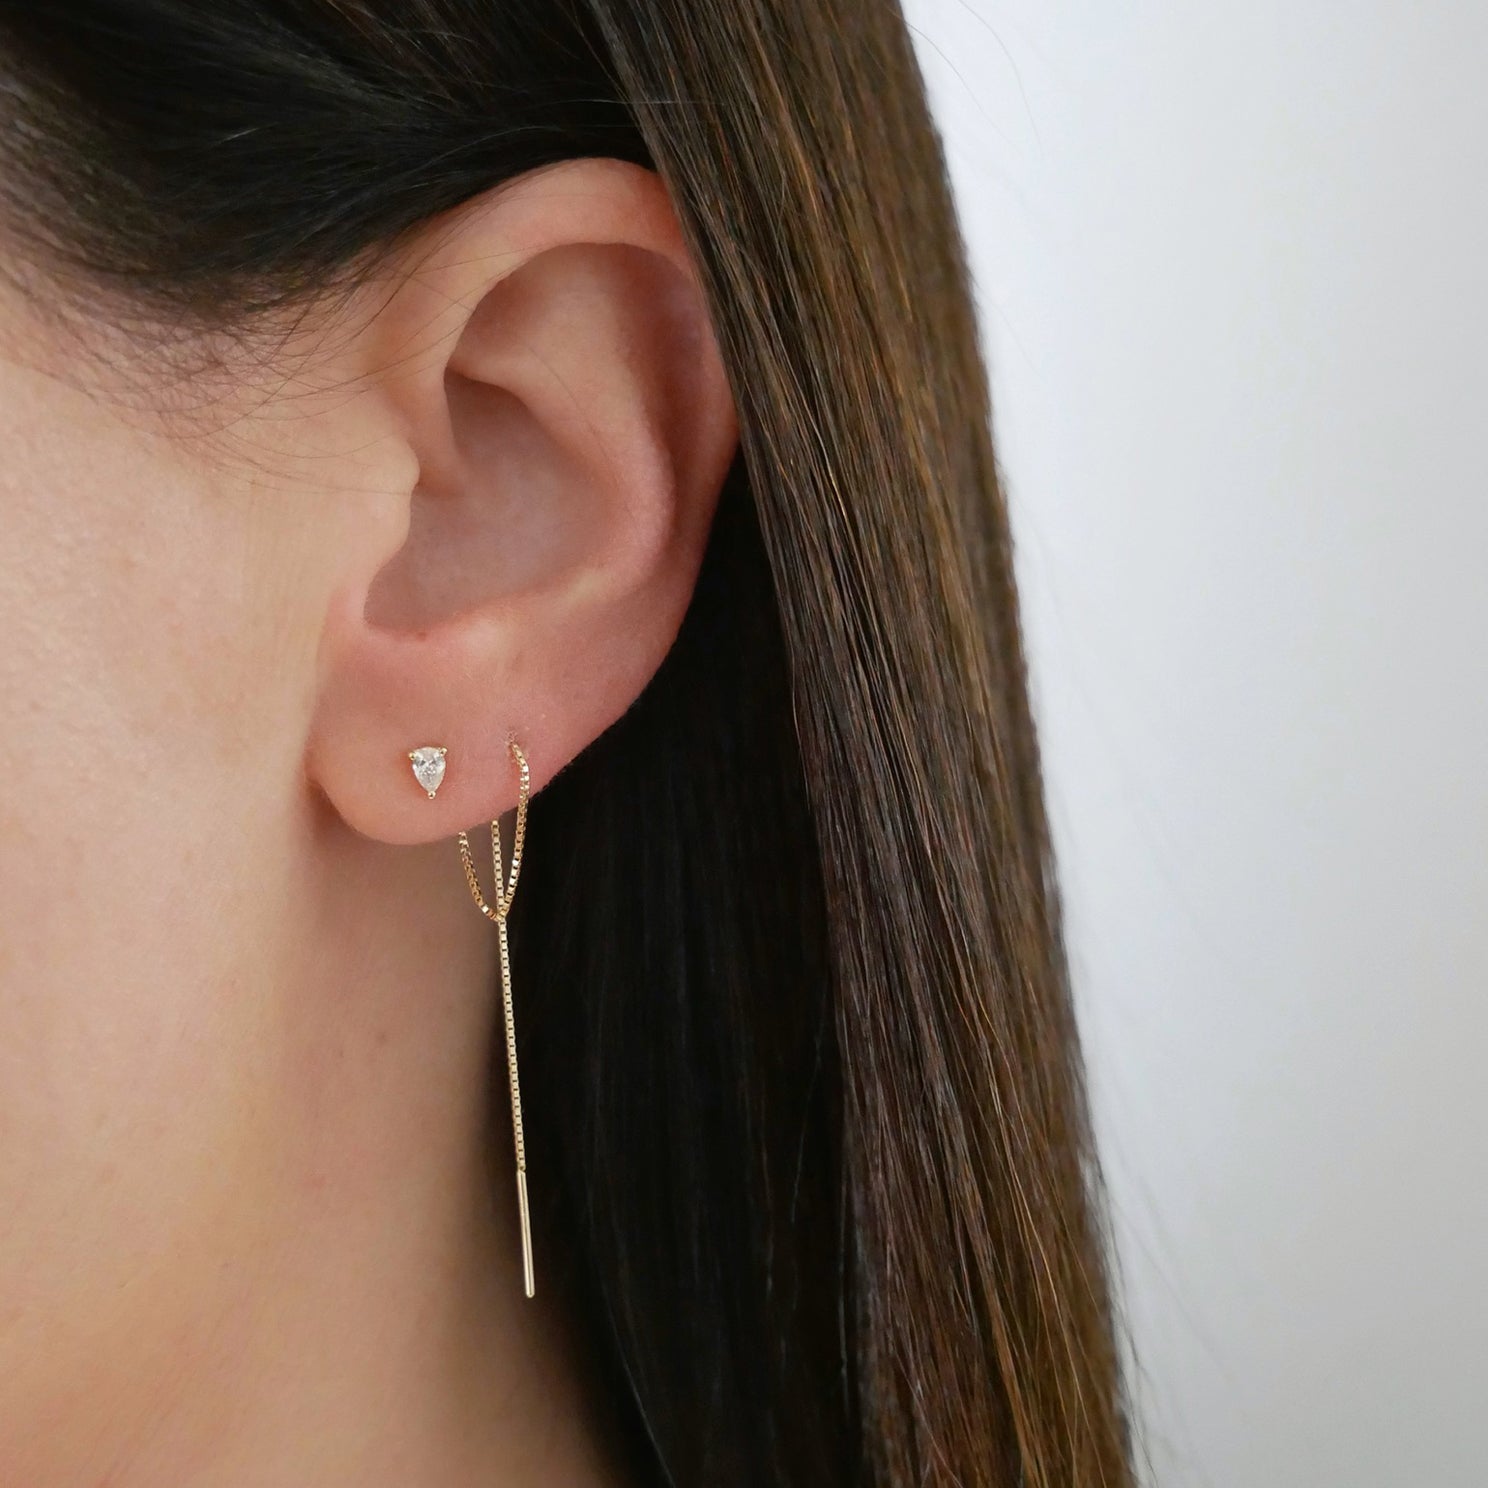 Pear Diamond Liquid Gold Threader Earring styled on ear lobe of model